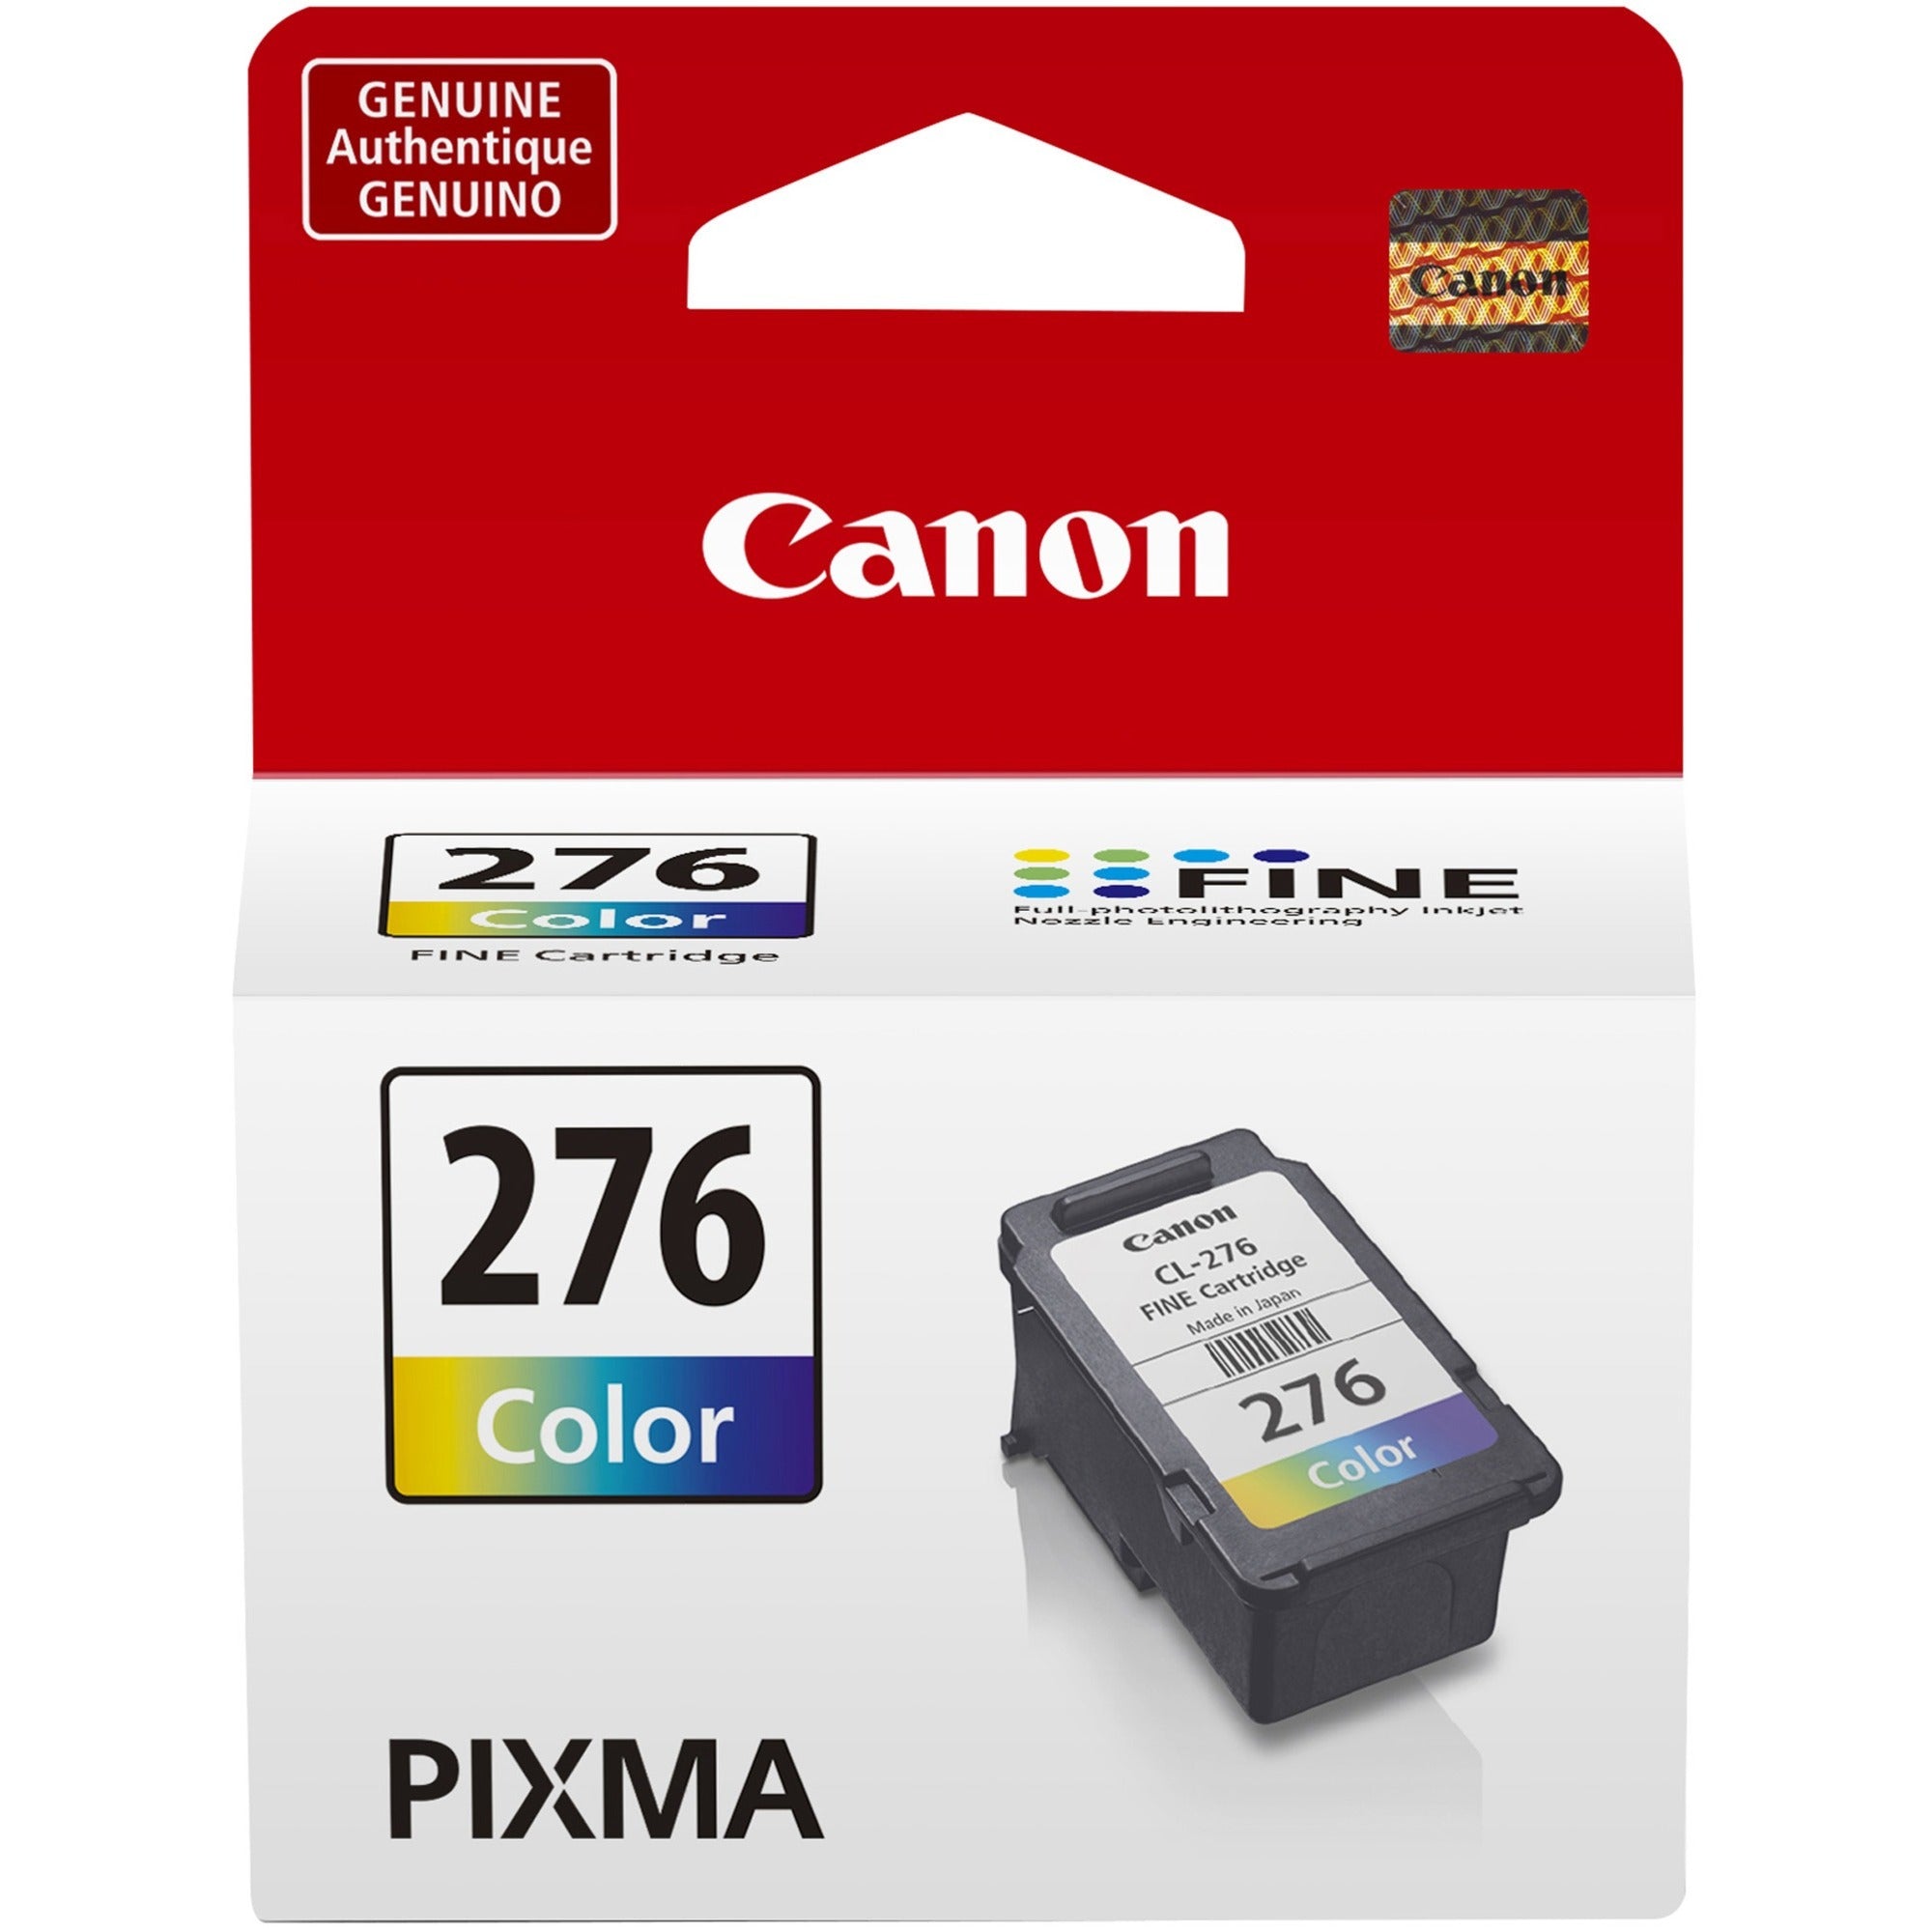 Canon CL276 Original Inkjet Ink Cartridge - Multicolor - 1 Each - 6.2 mL Color